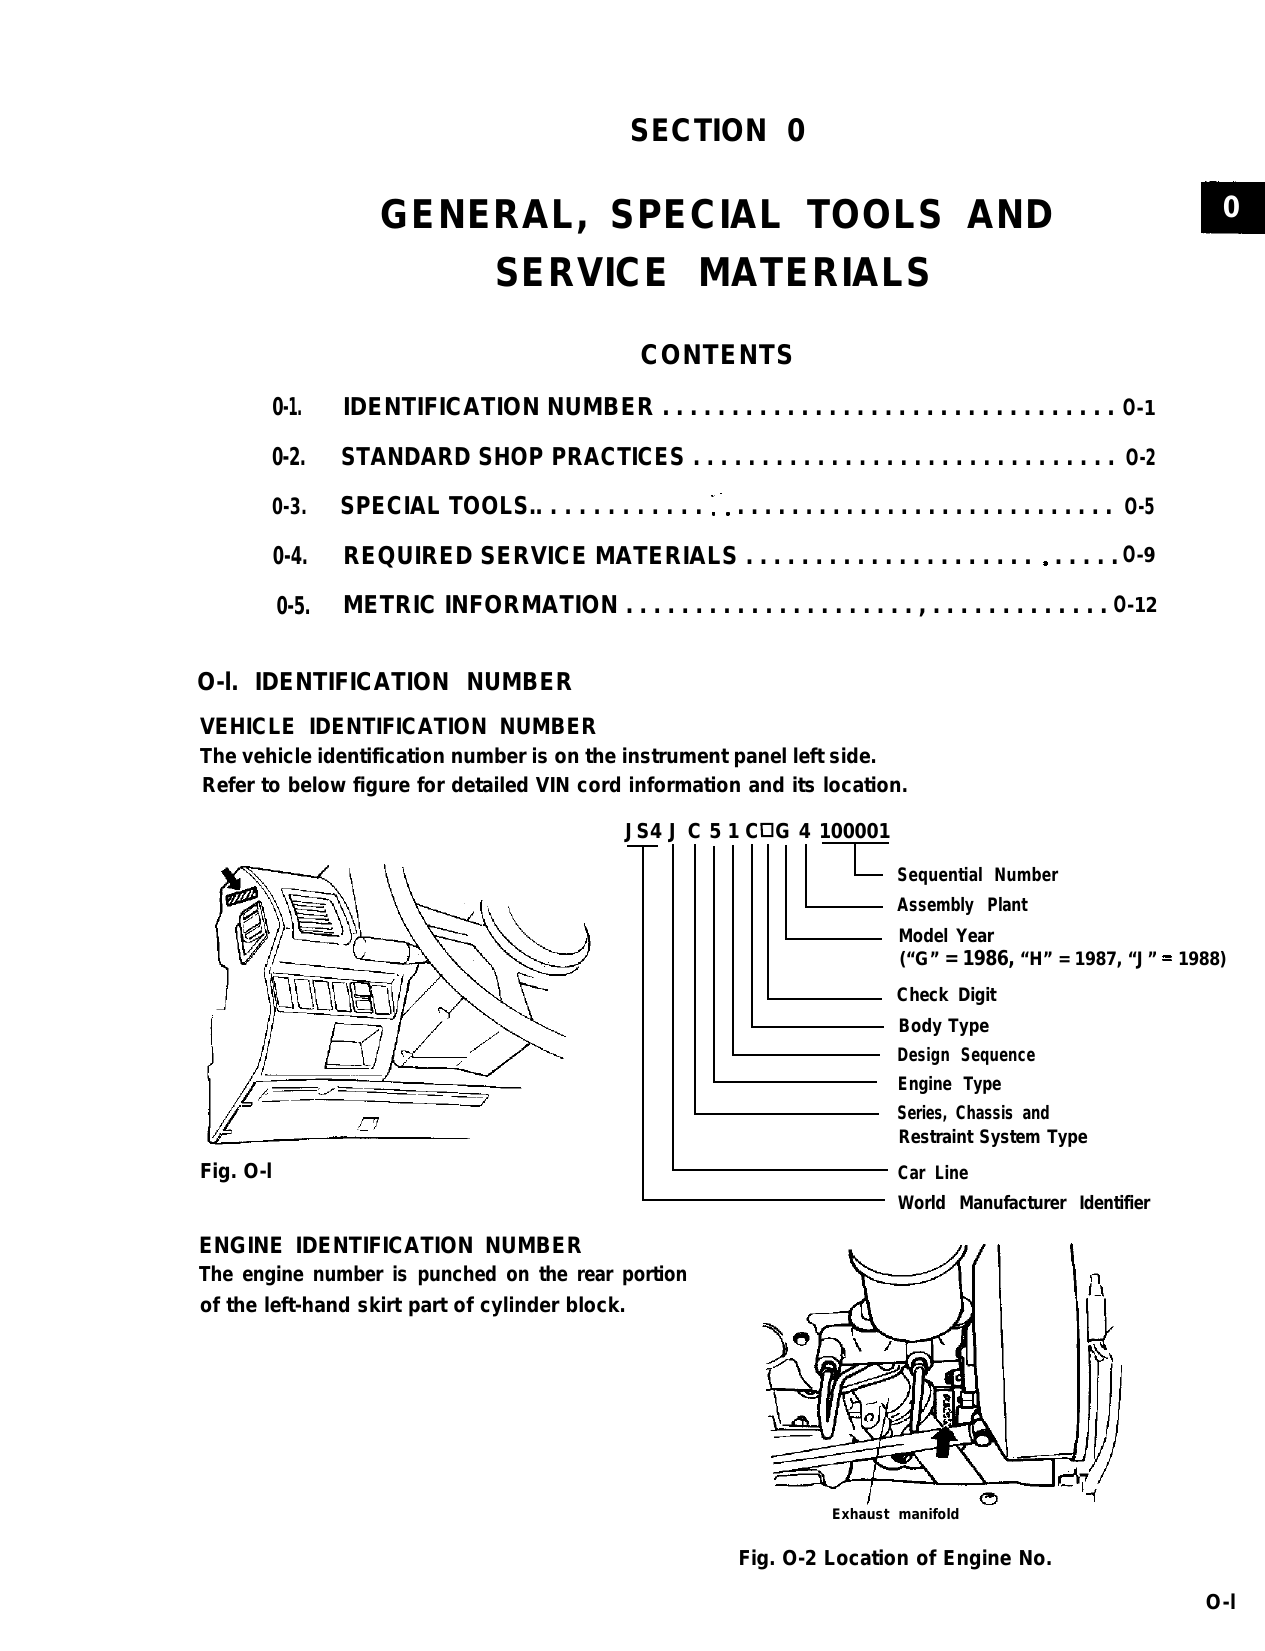 1987 Suzuki SJ Samurai service manual Preview image 4